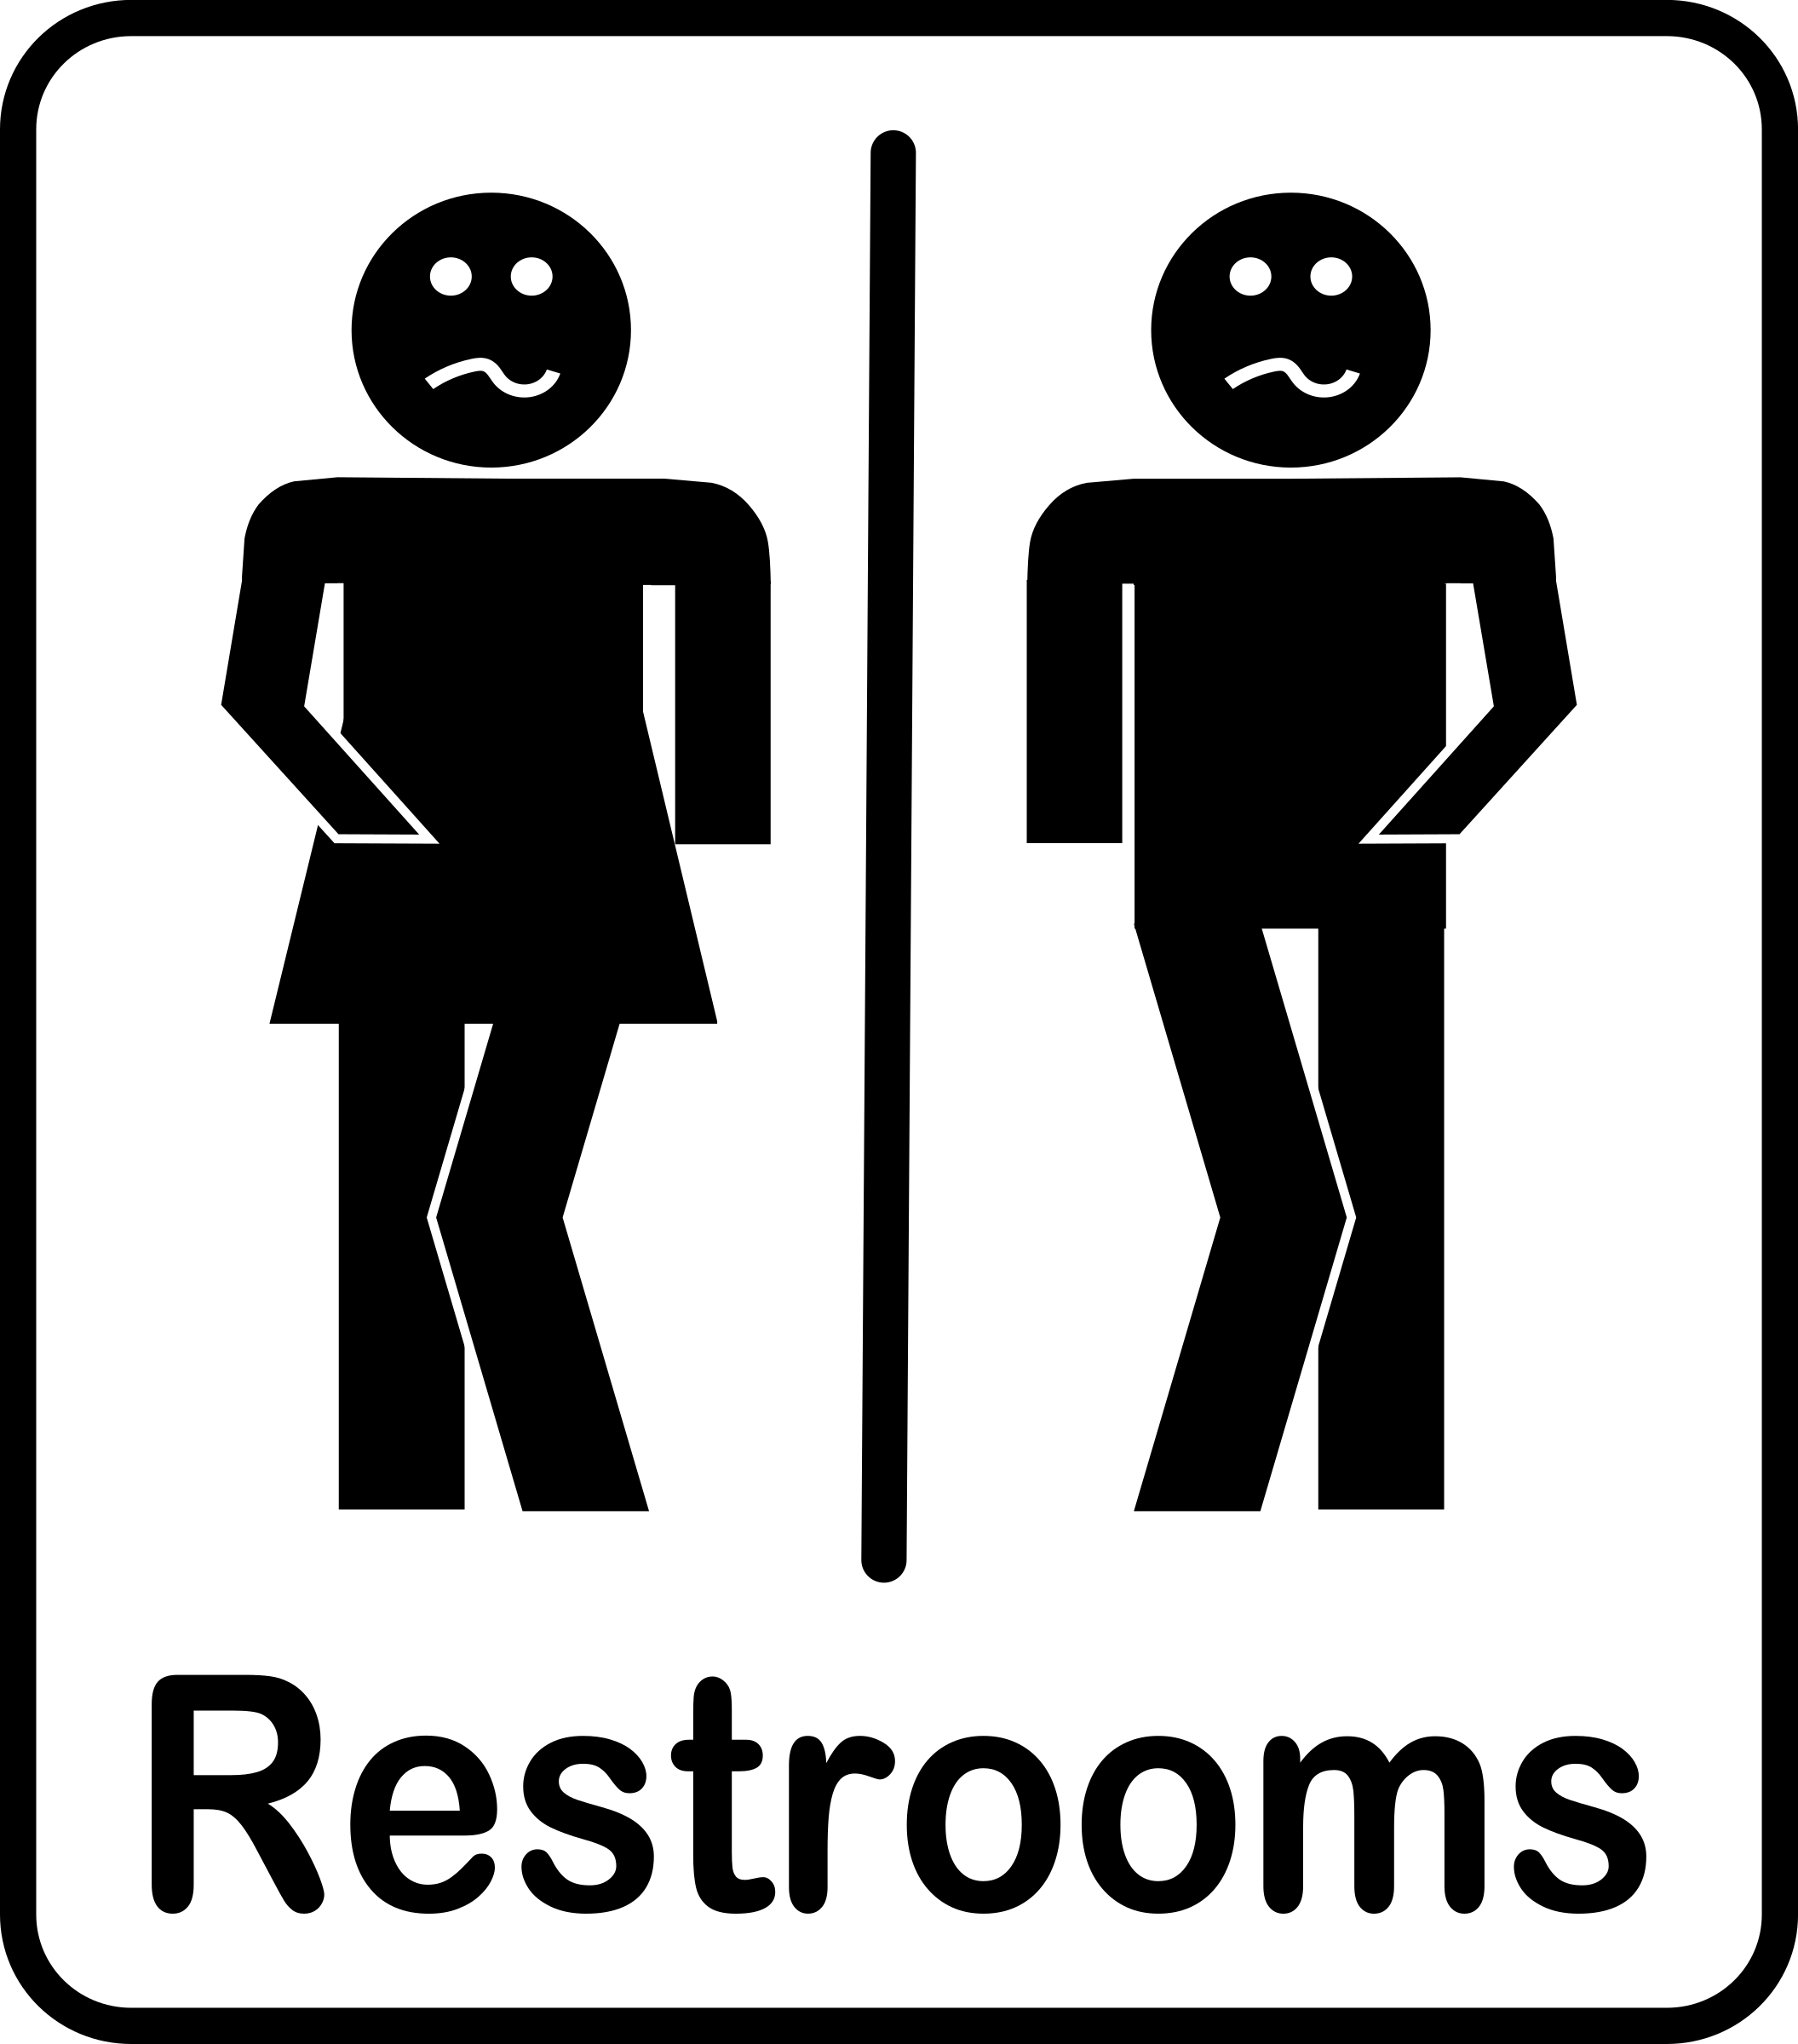 Toilet Sign clip art - vector